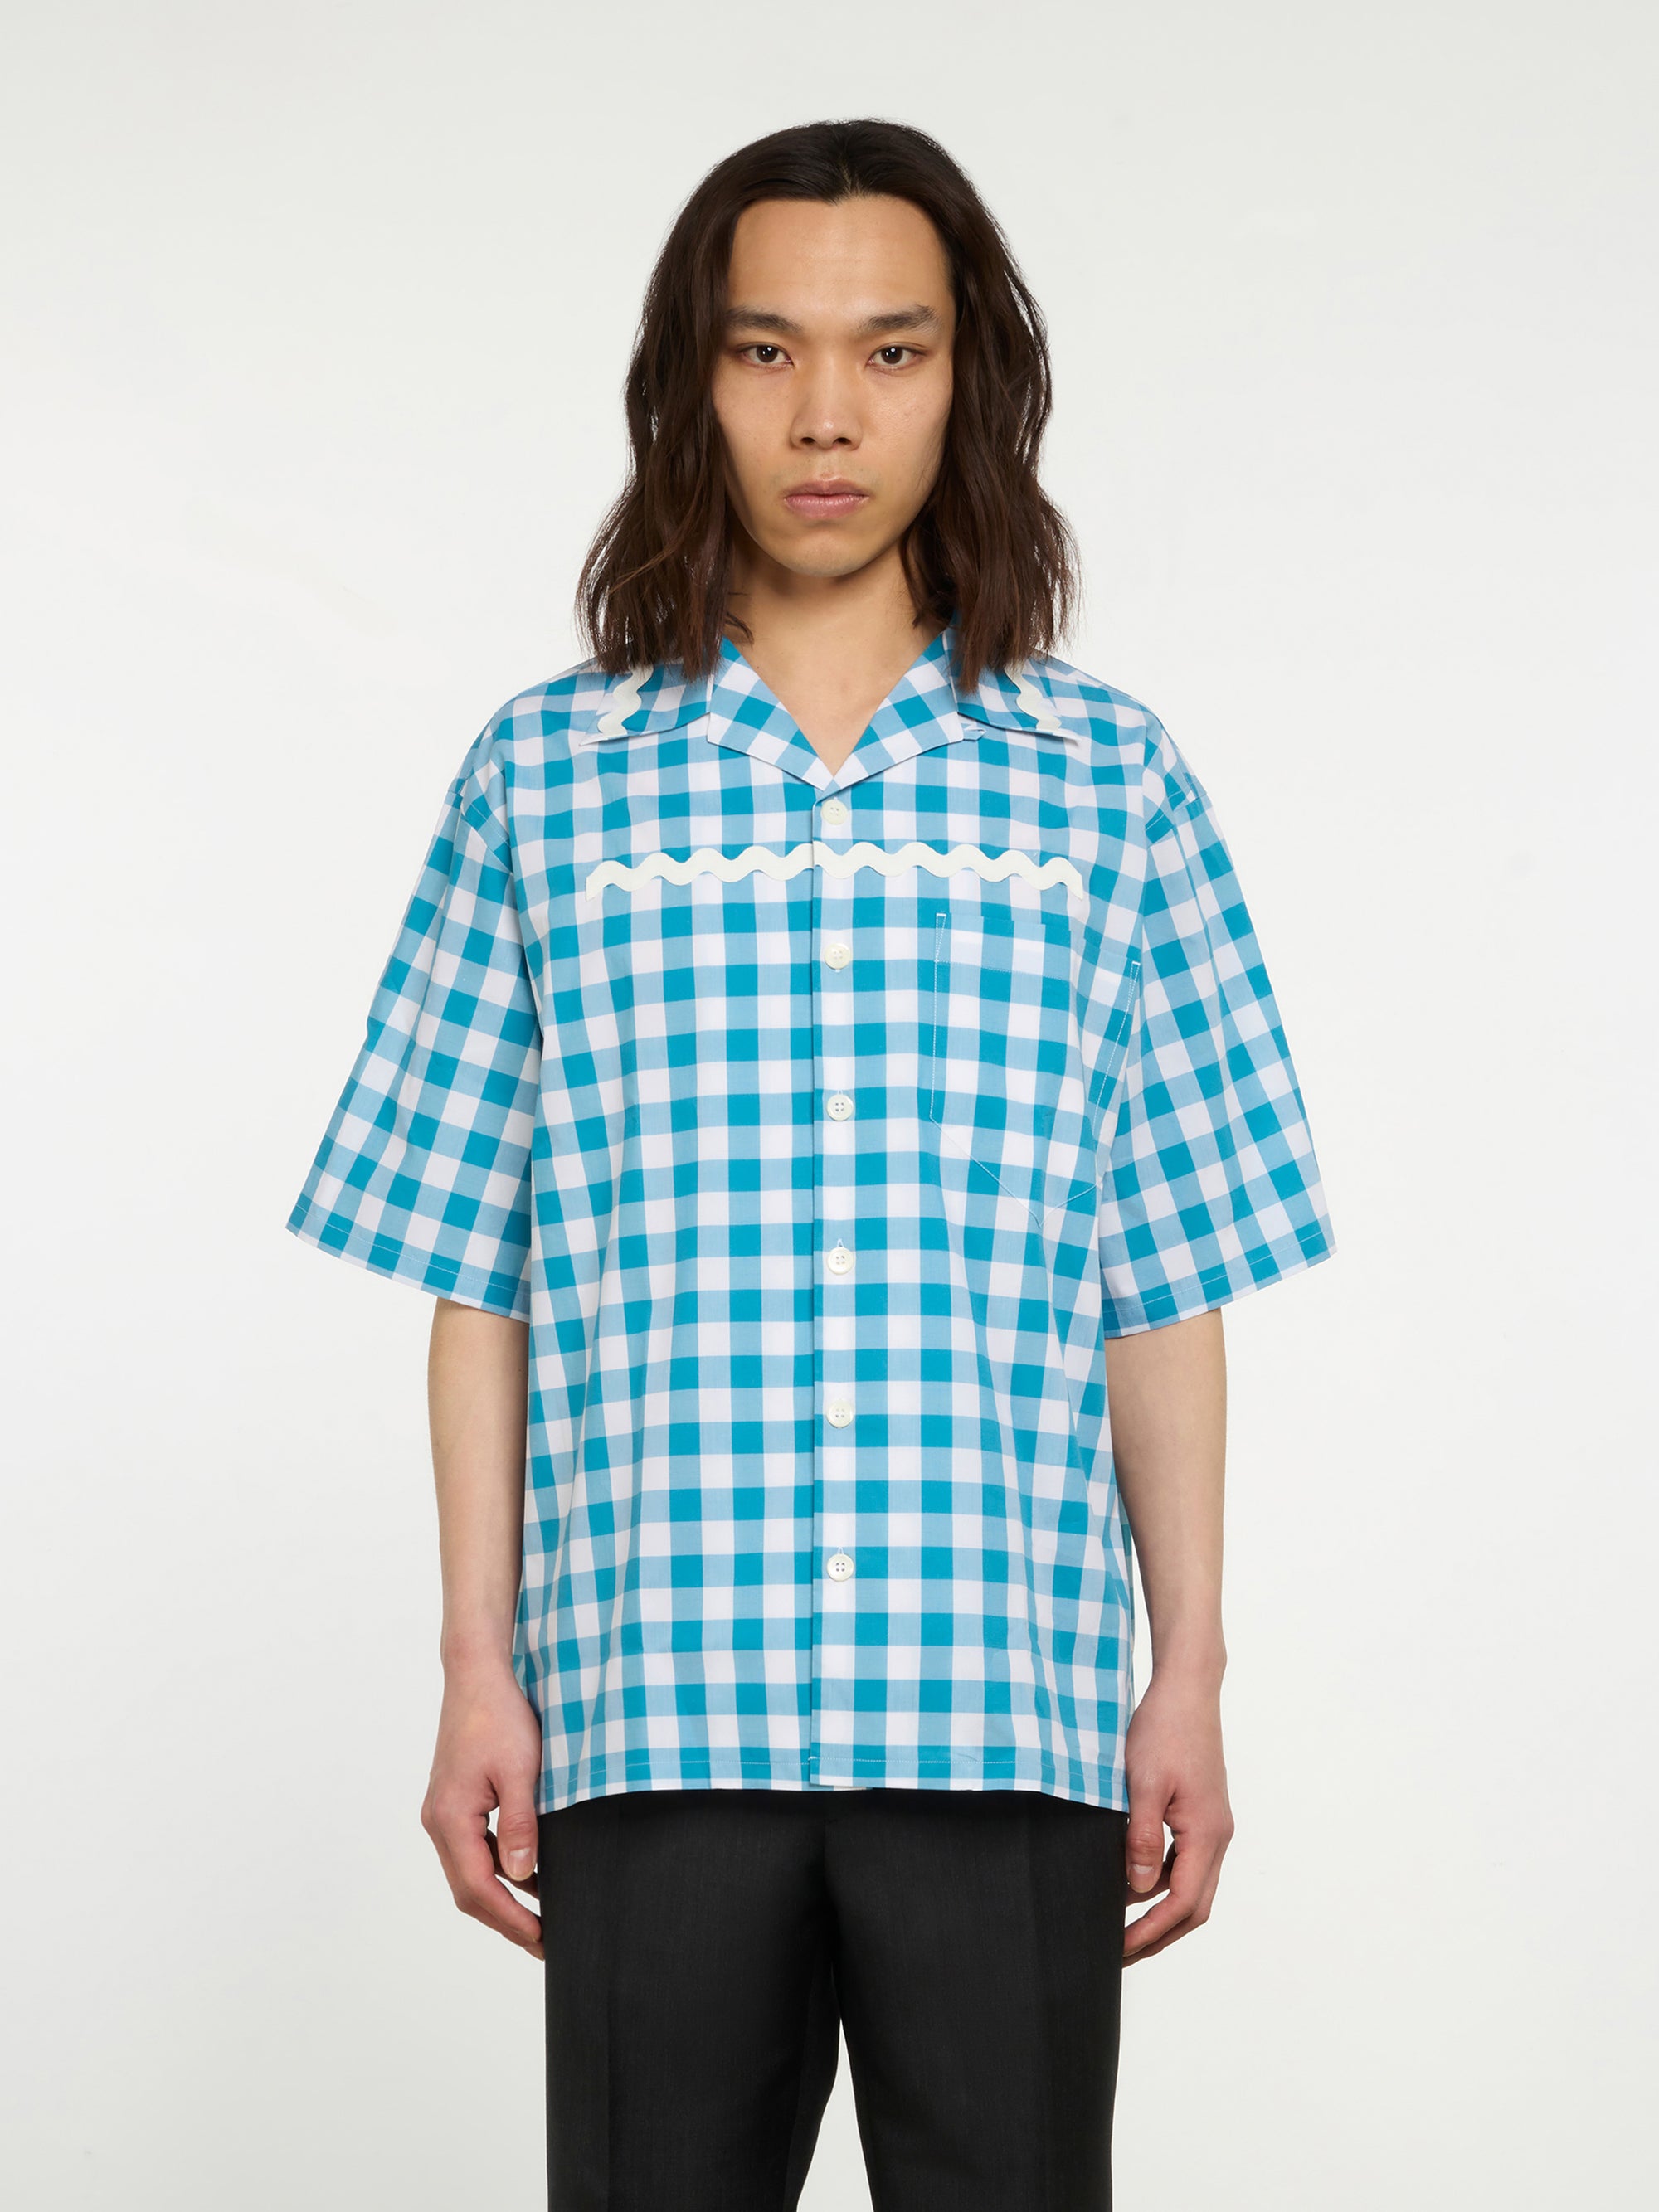 Prada - Men’s Check Shirt - (White/Turquoise) view 1